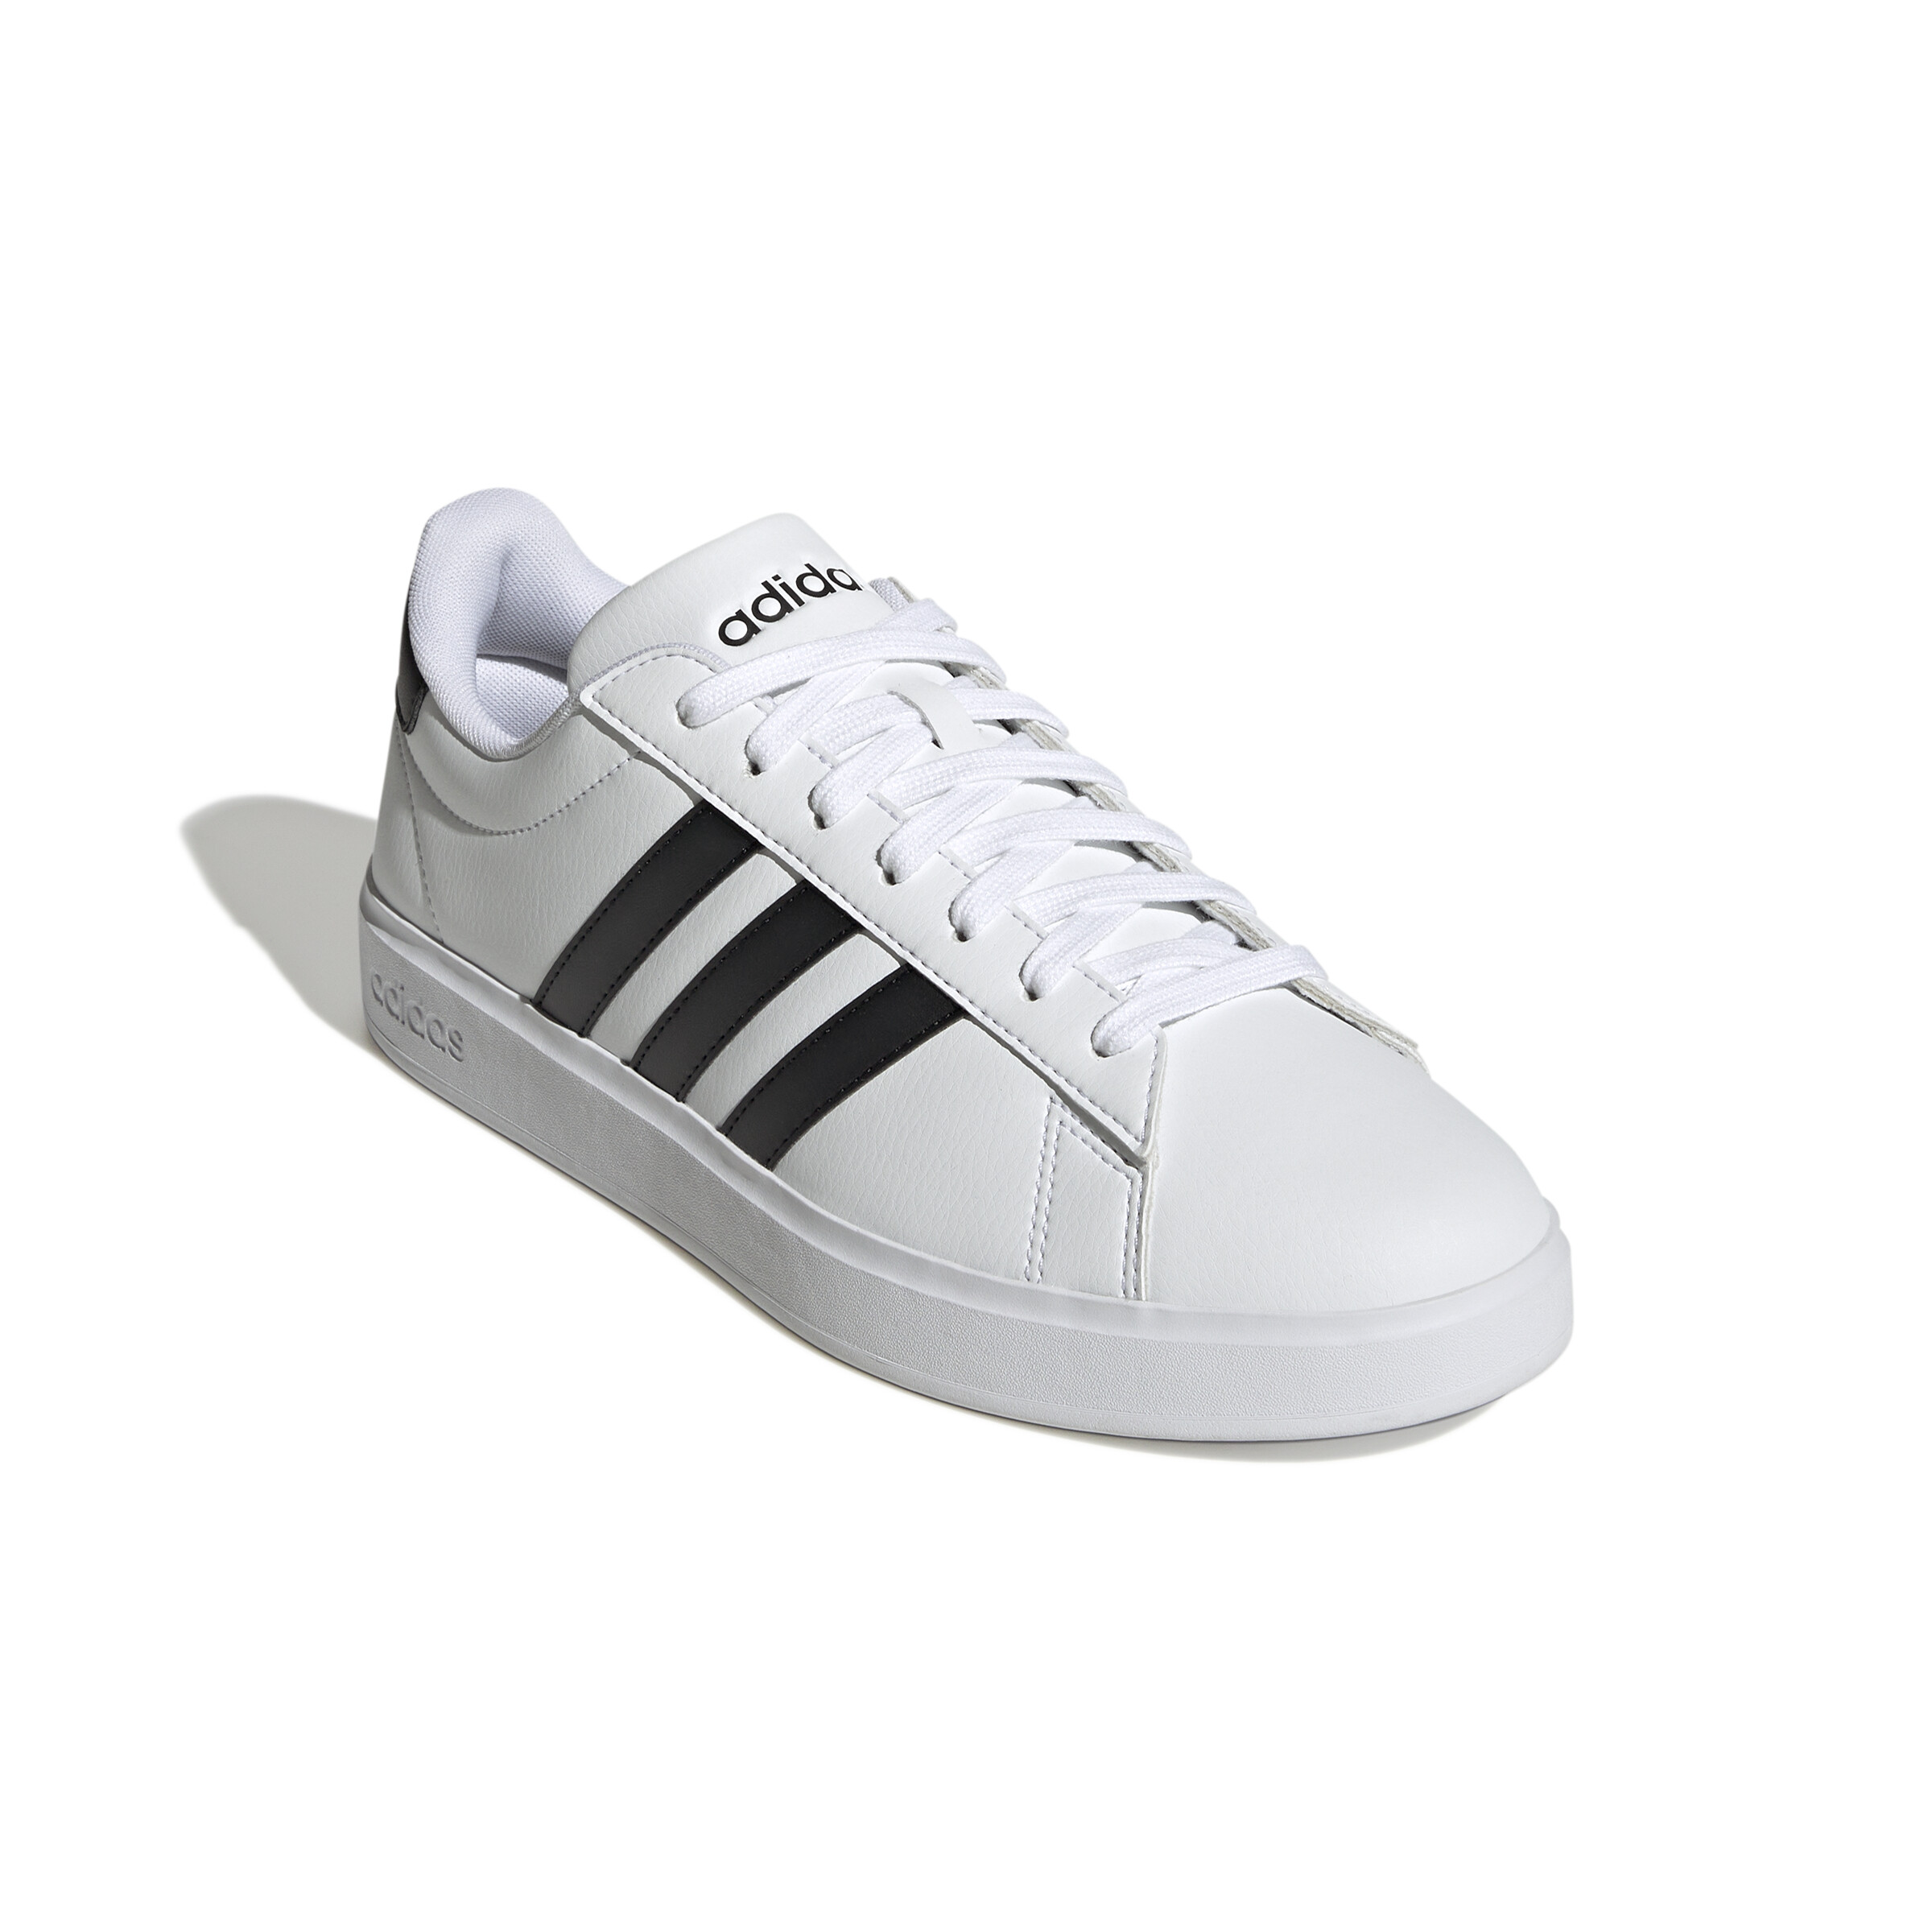 Incaltaminte Barbati adidas Originals Grand Court 20 Footwear WhiteCore BlackFootwear White